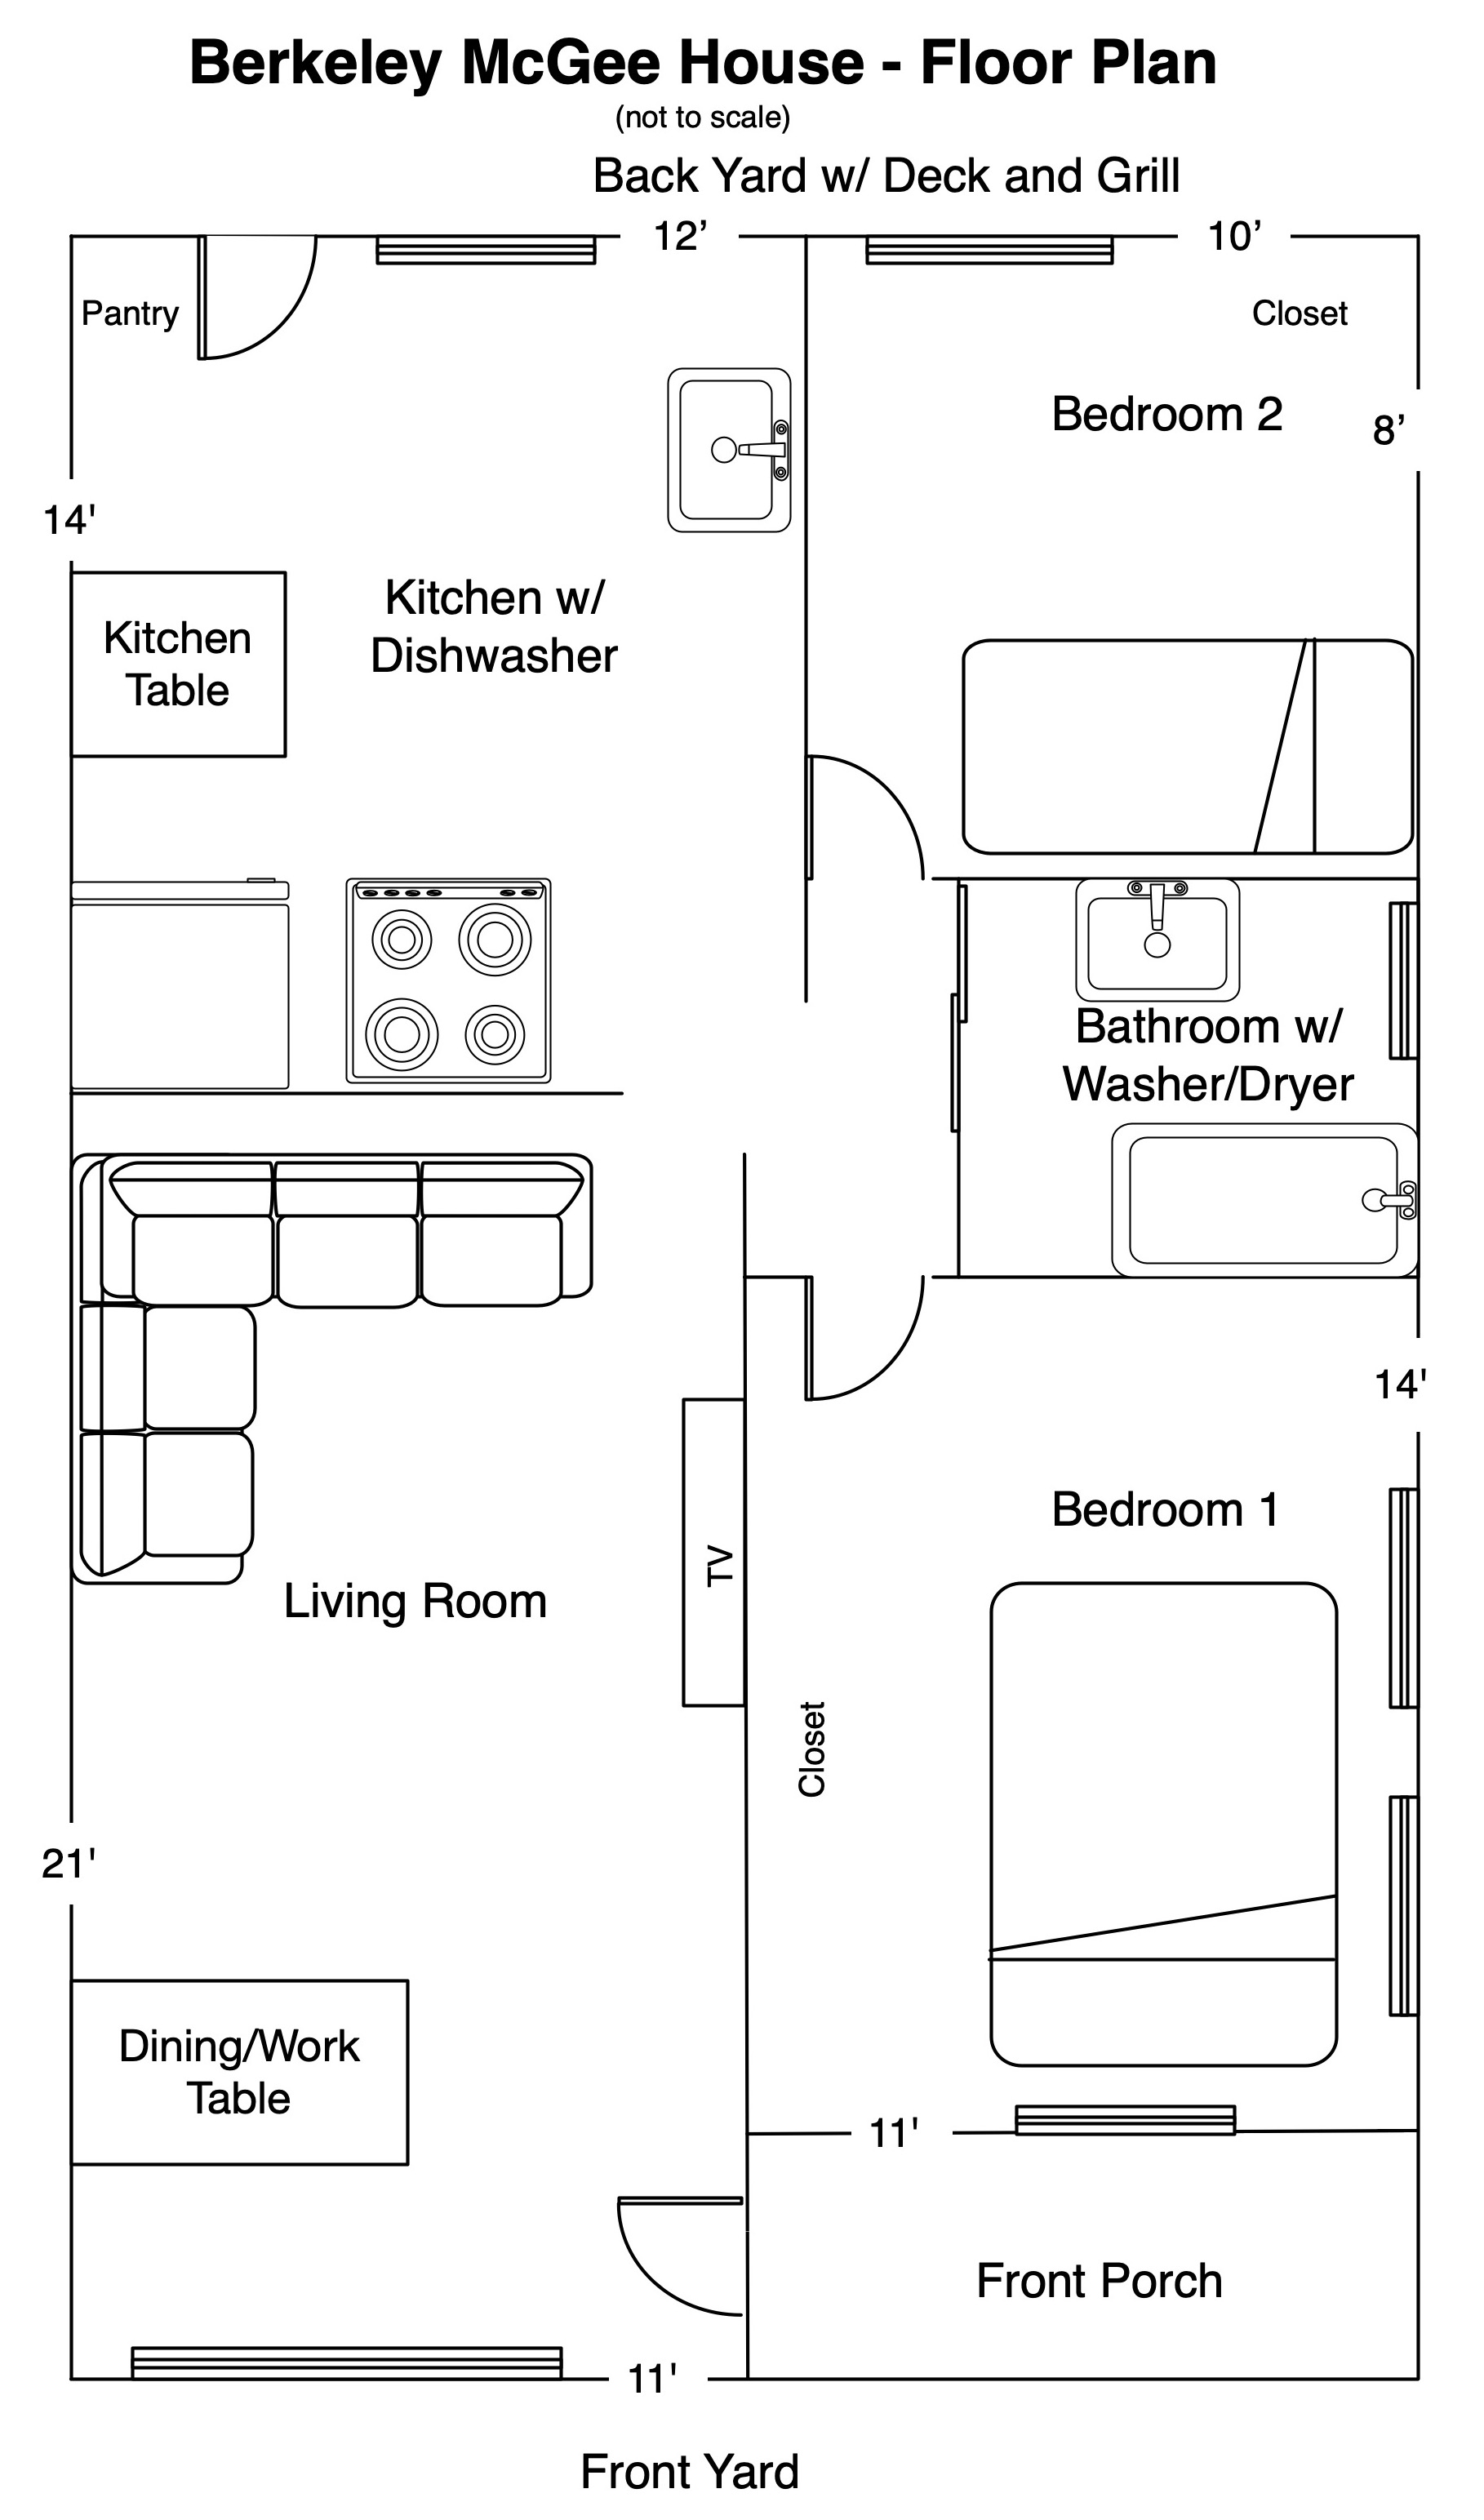 McGee House Floor Plan